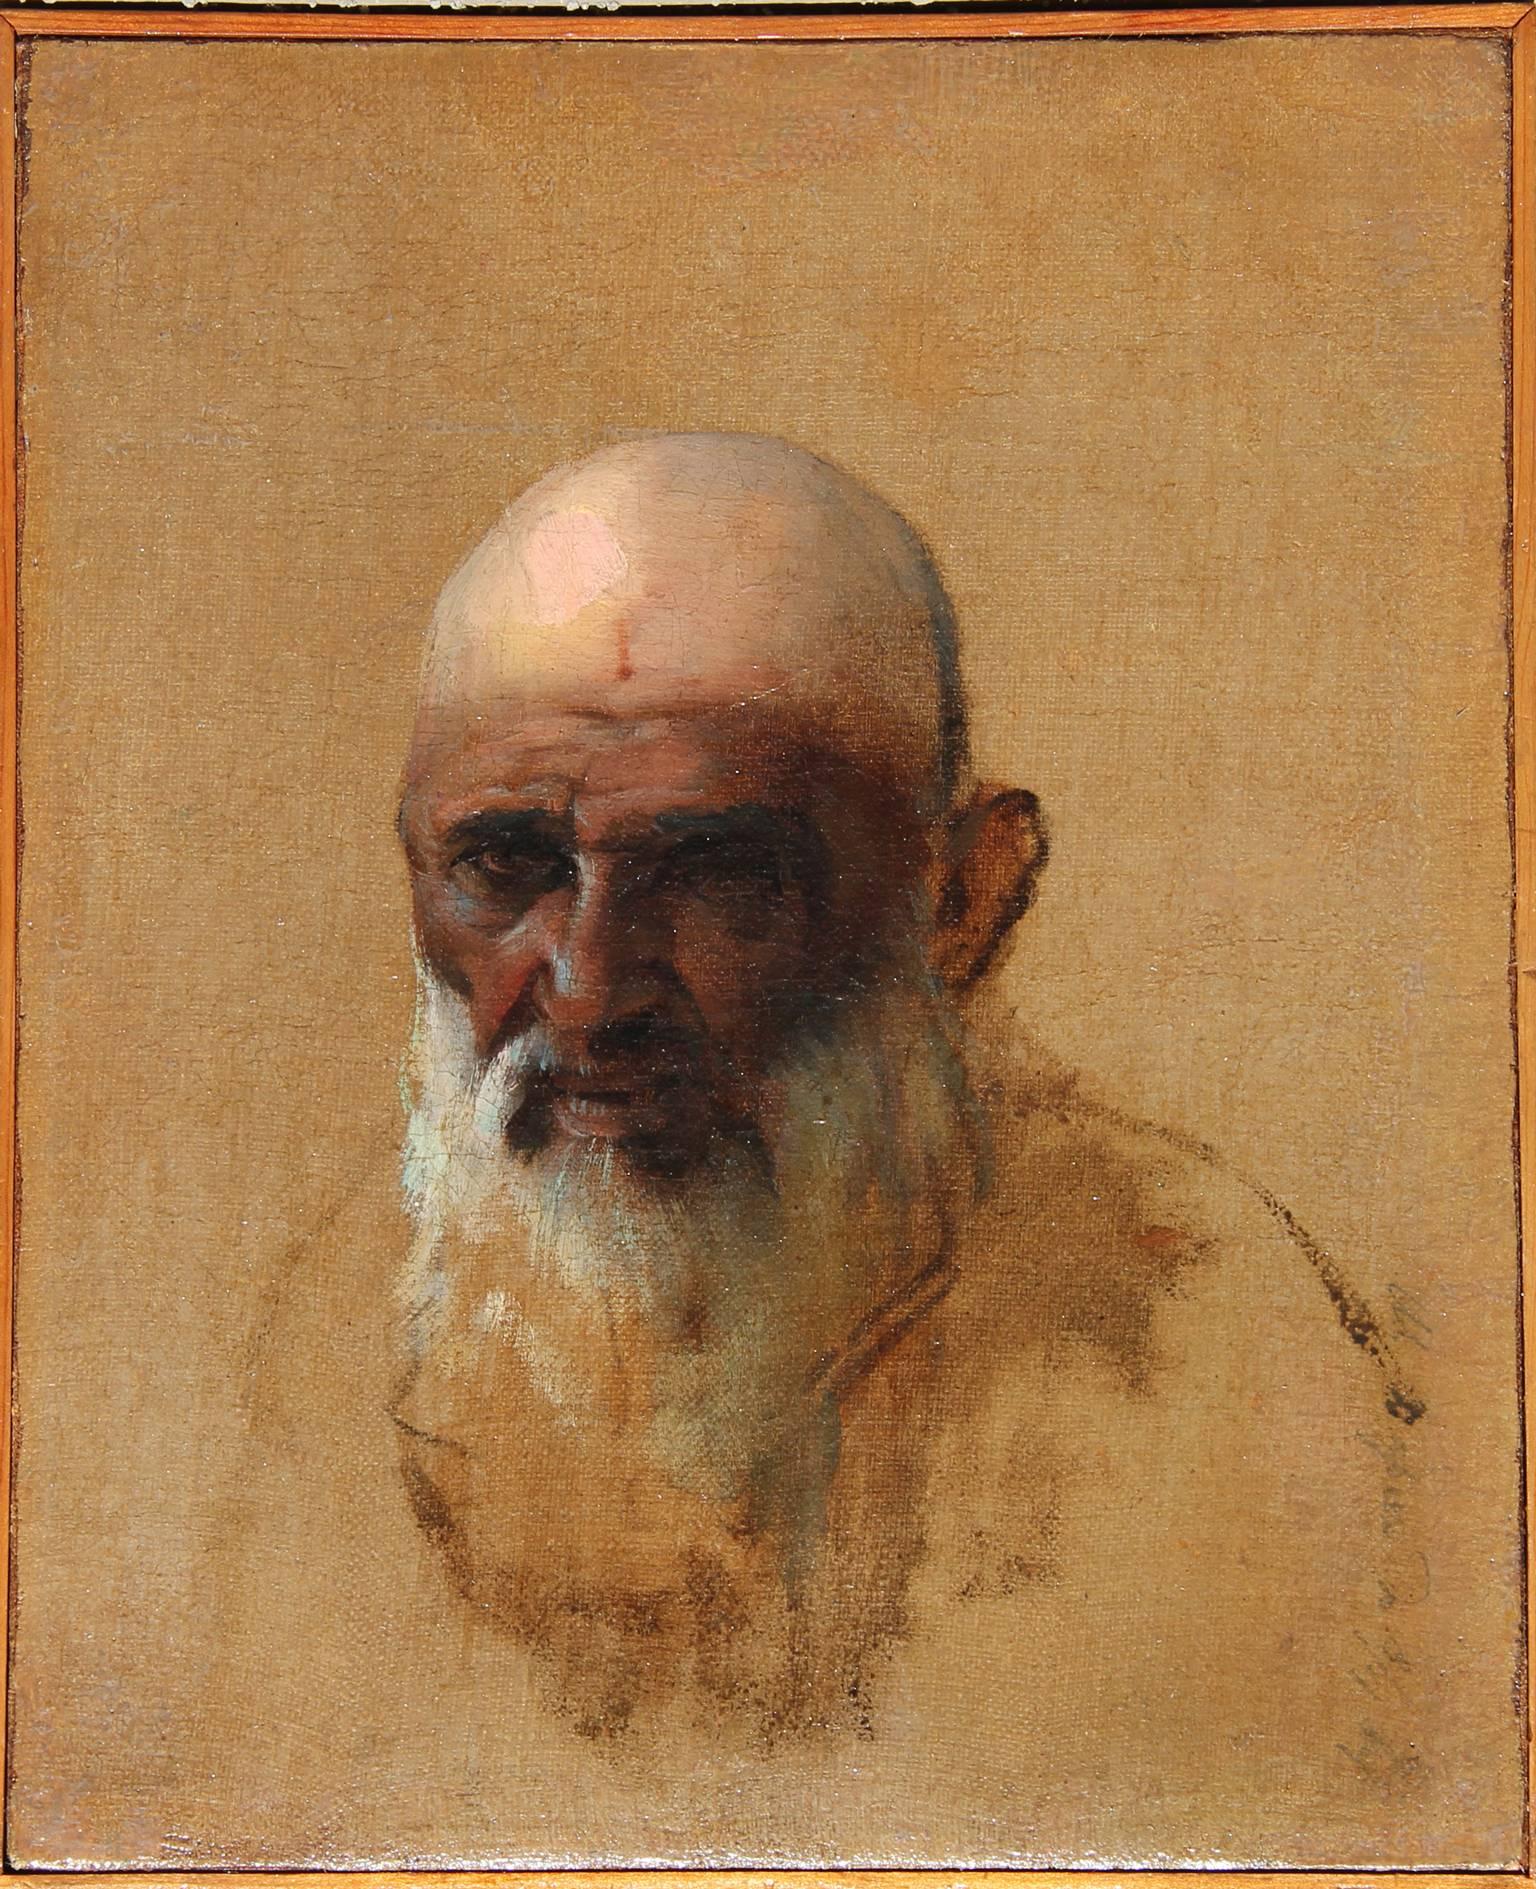 Vasily Vasilievich Vereshchagin Portrait Painting - Portrait of a Bearded Man, Oil on Canvas, Russian